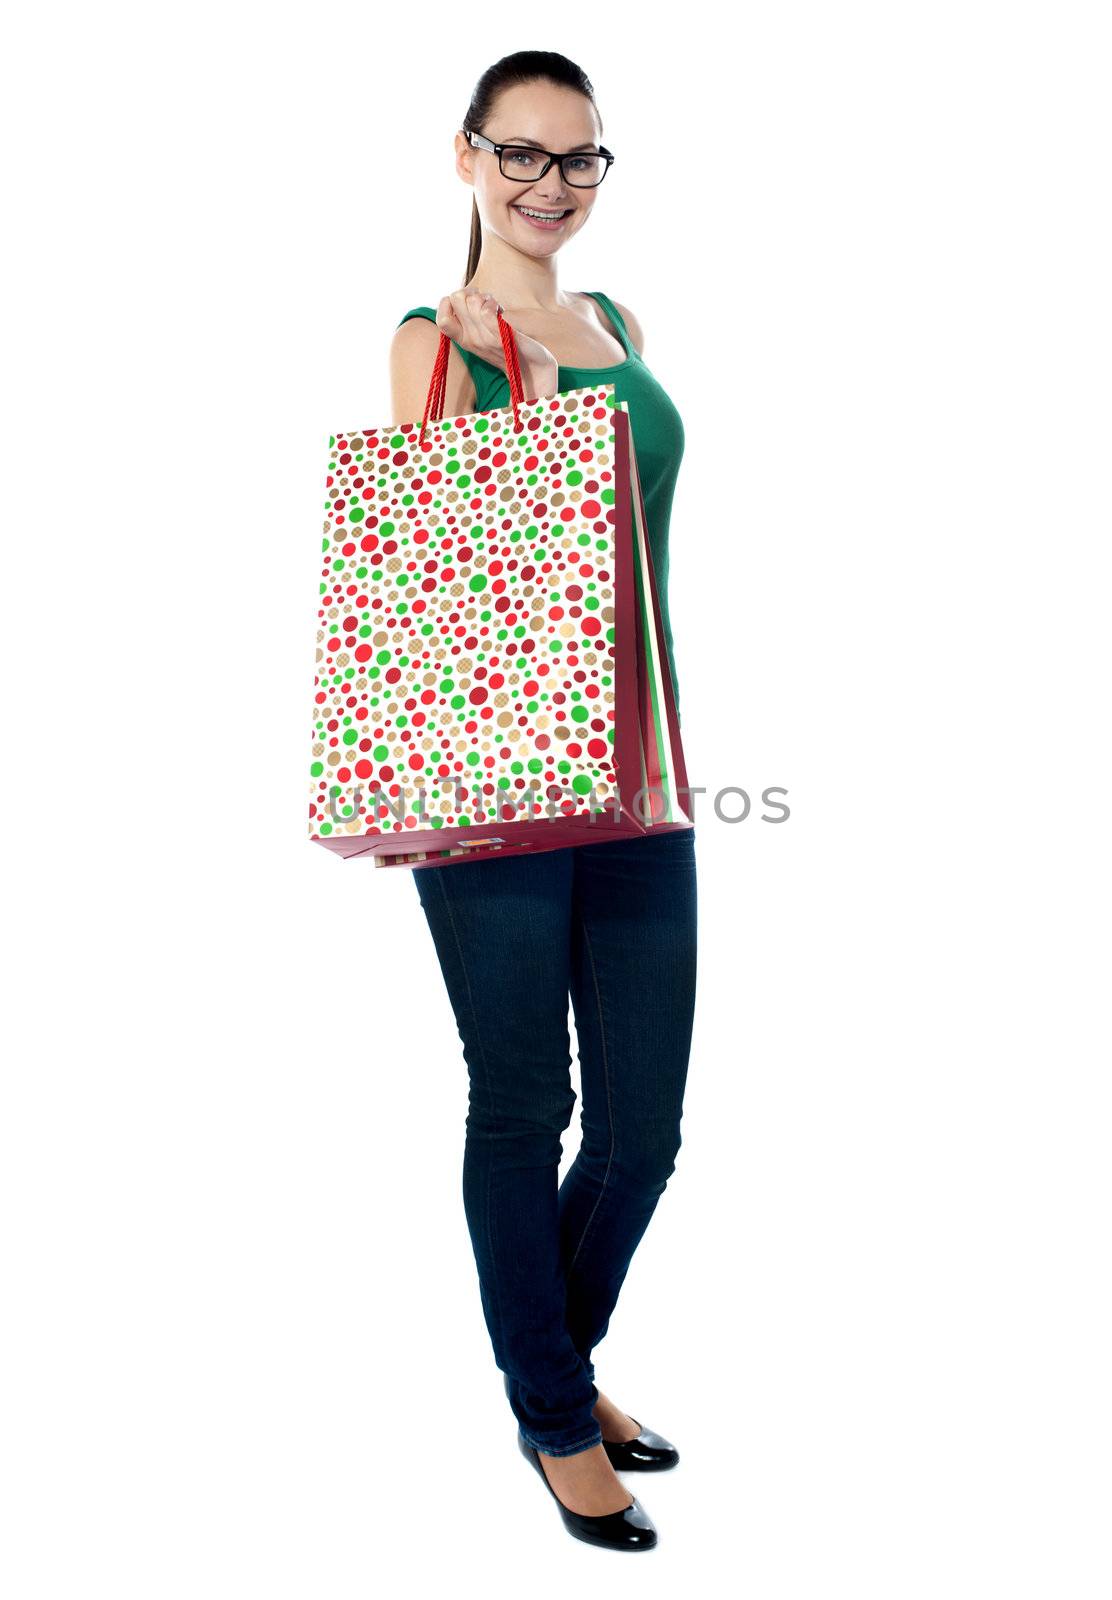 Stunning young woman carrying shopping bags